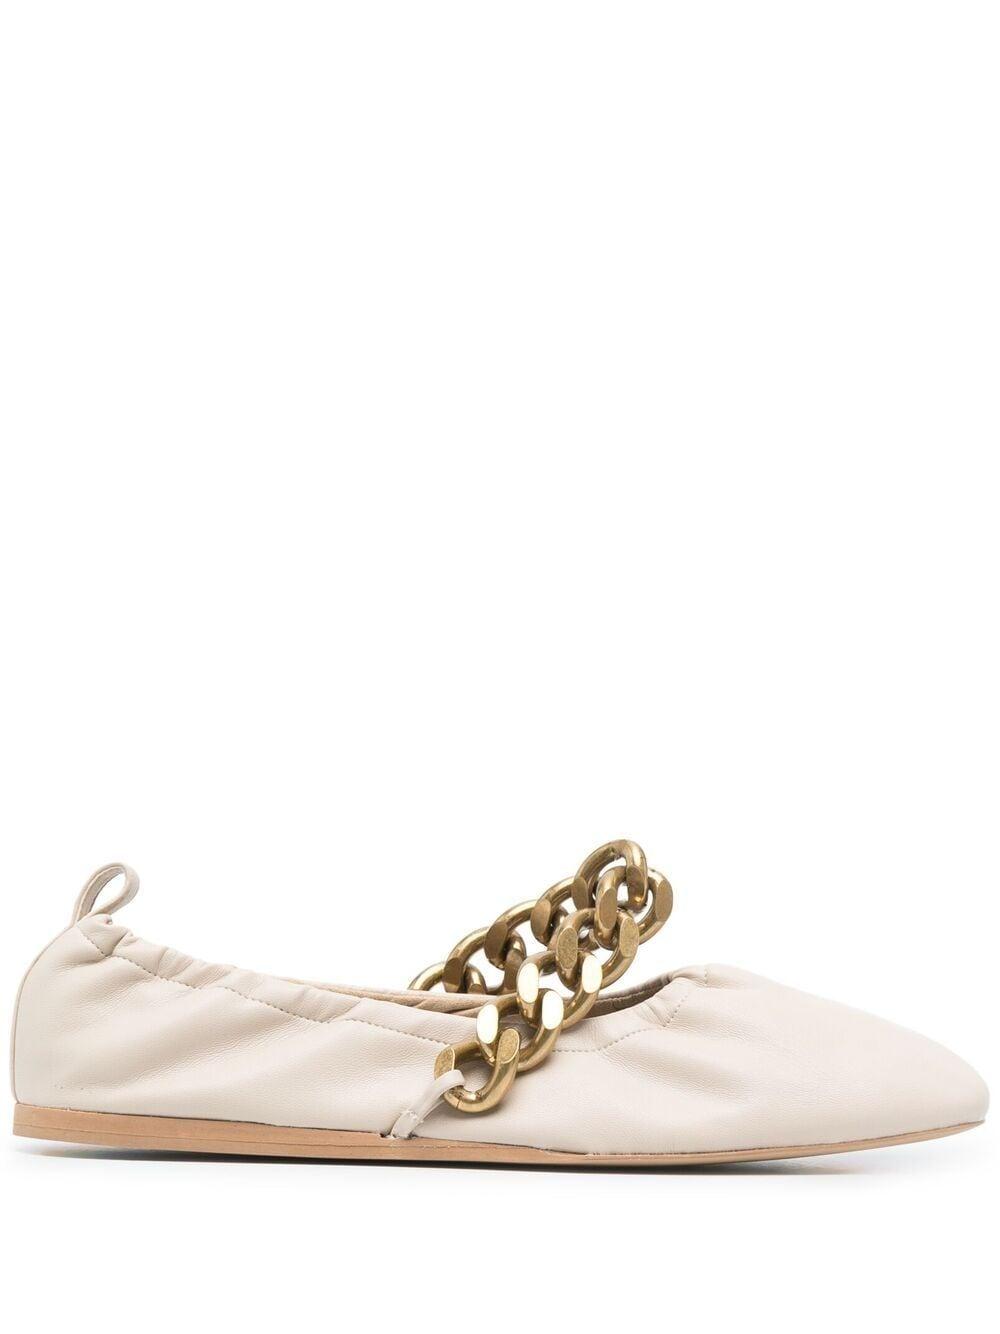 Stella McCartney Falabella Ballerina Shoes | Lyst